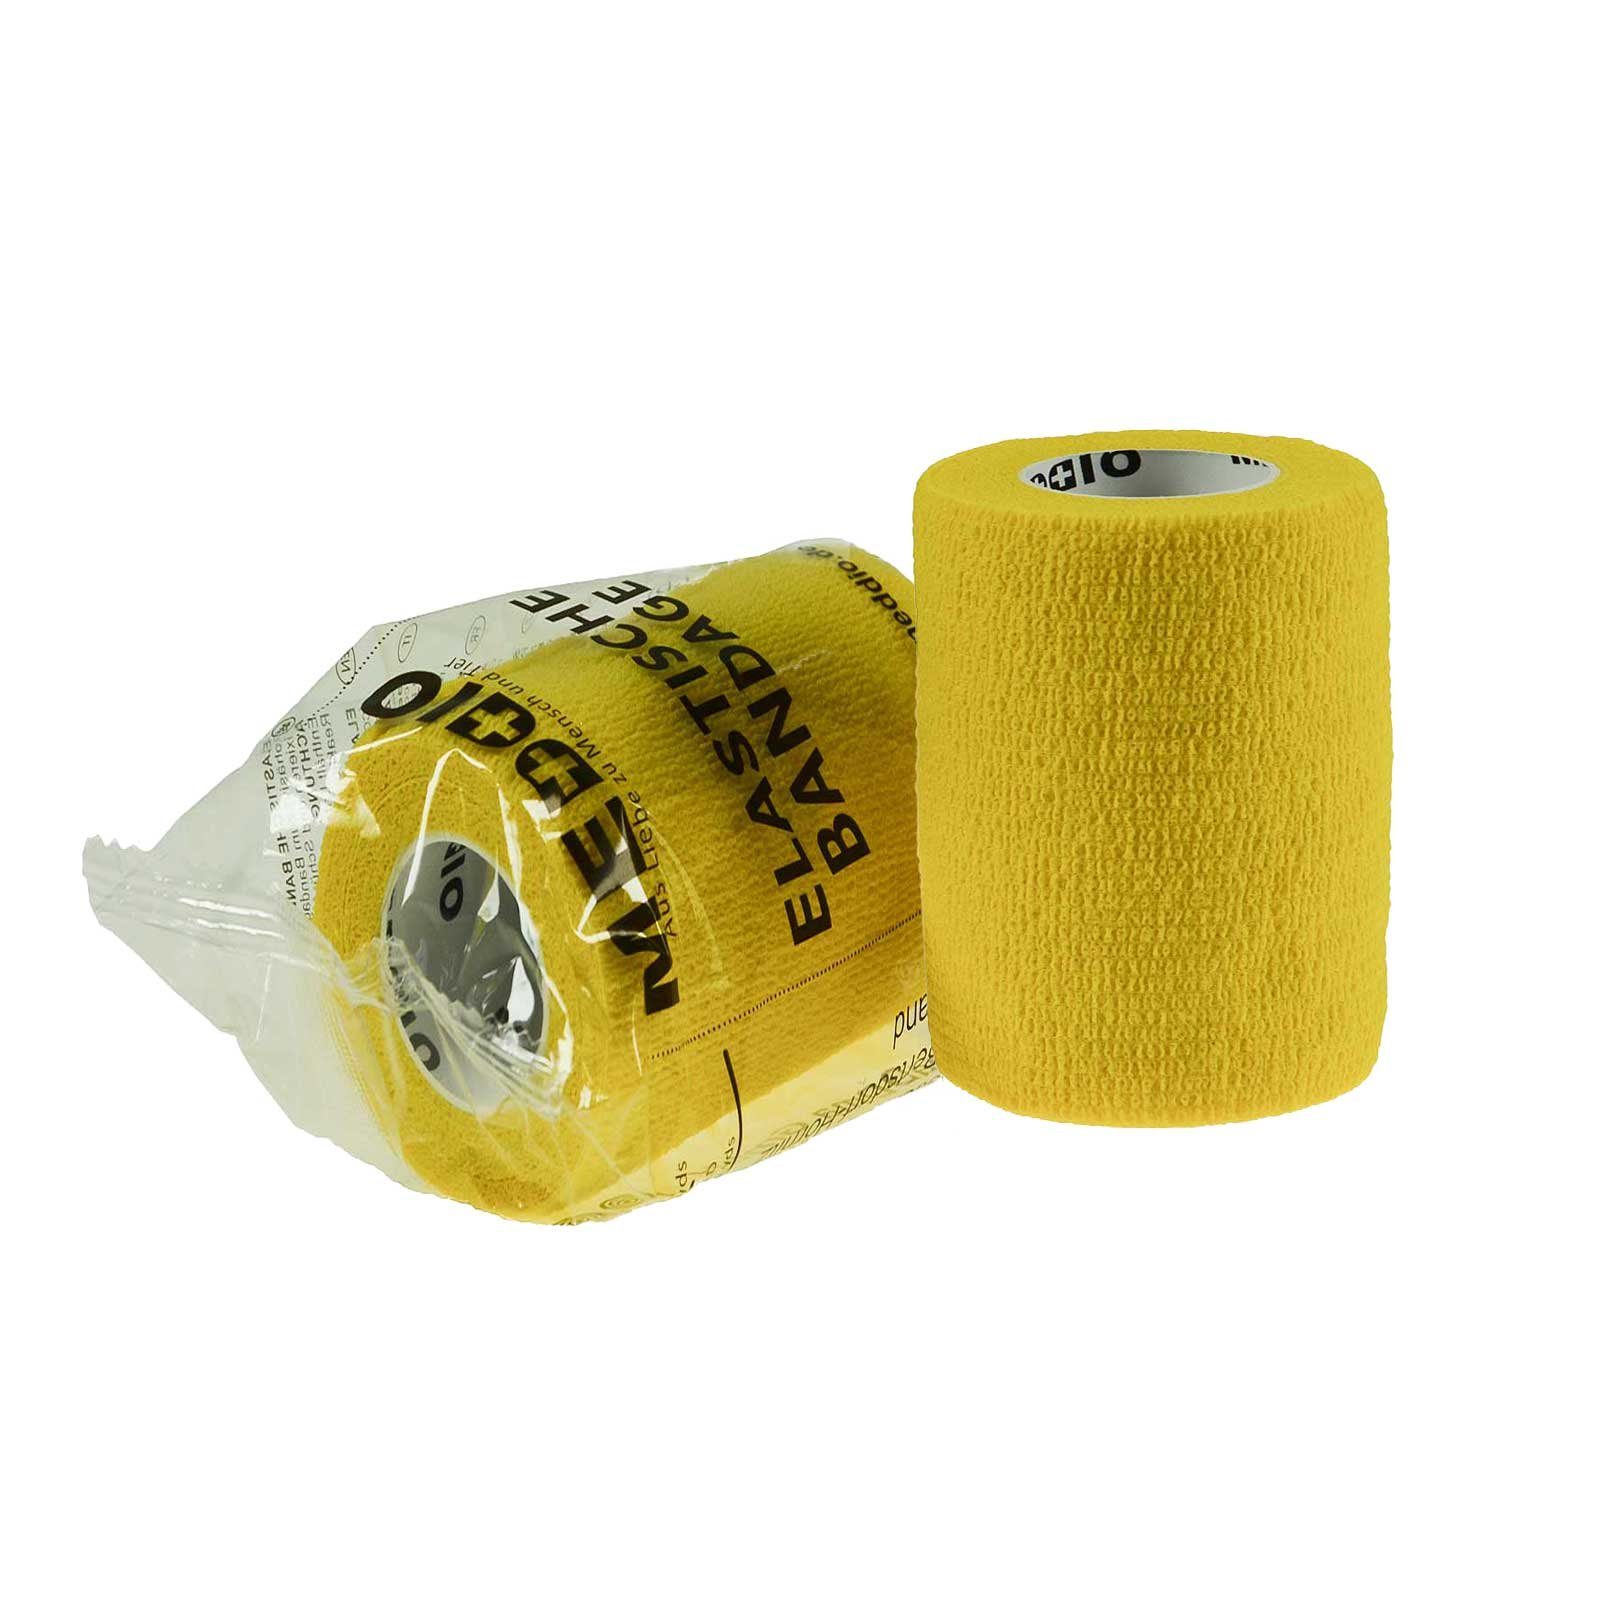 meDDio Pferdebandage 1 Haftbandage Selbsthaftende Bandage gelb 4,5m Fixierbinde / x 7,5cm